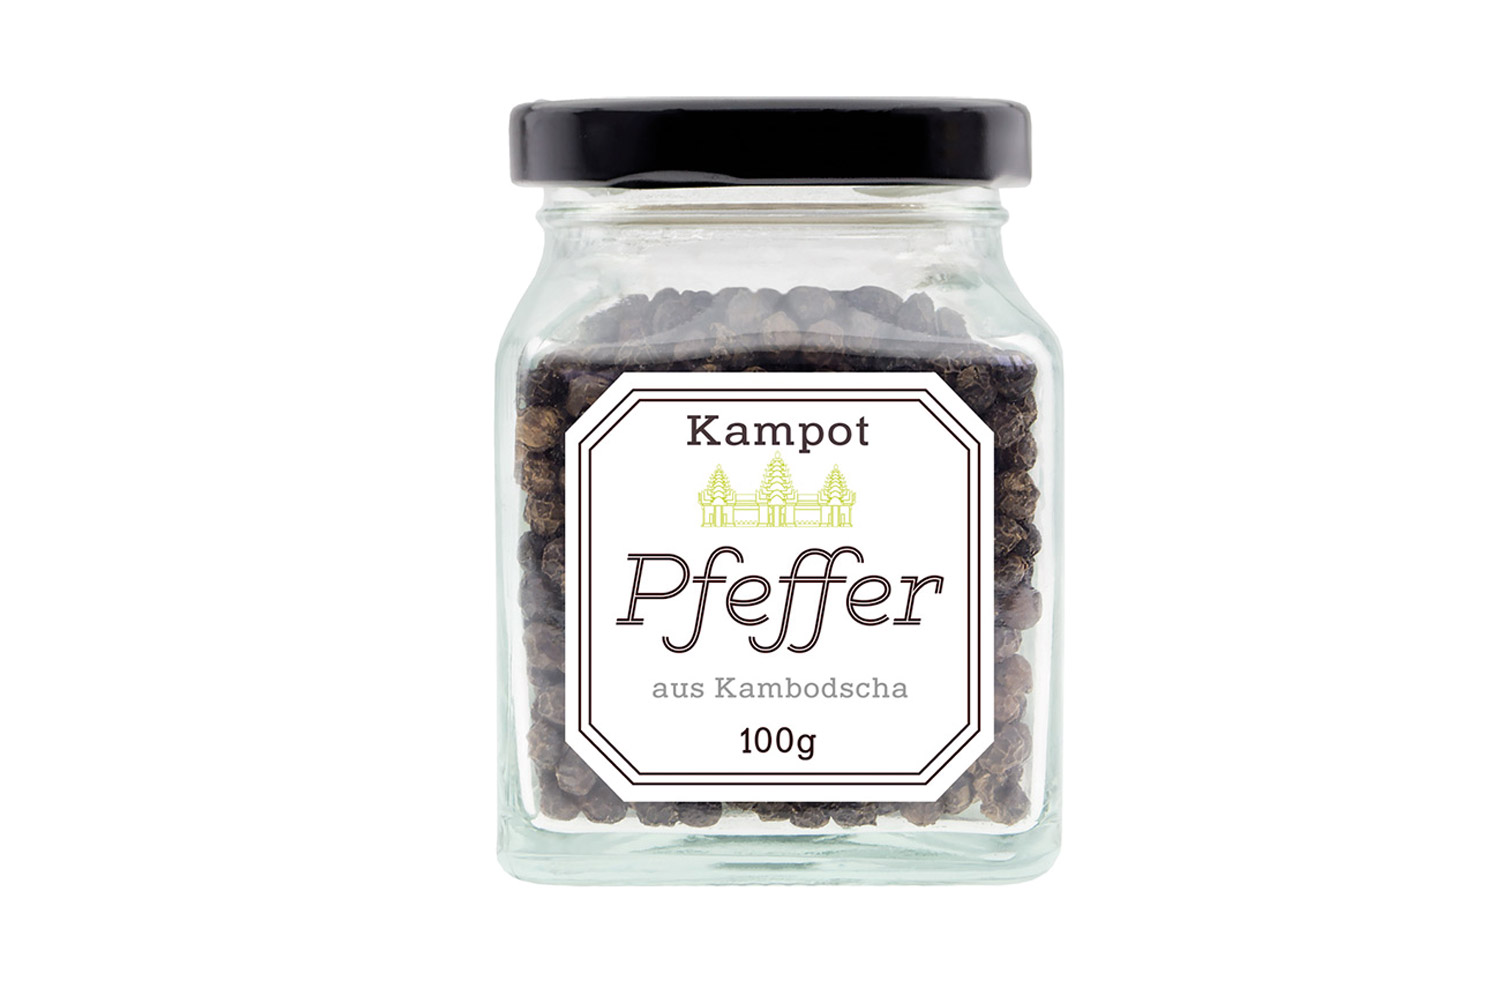 Kampot Pfeffer